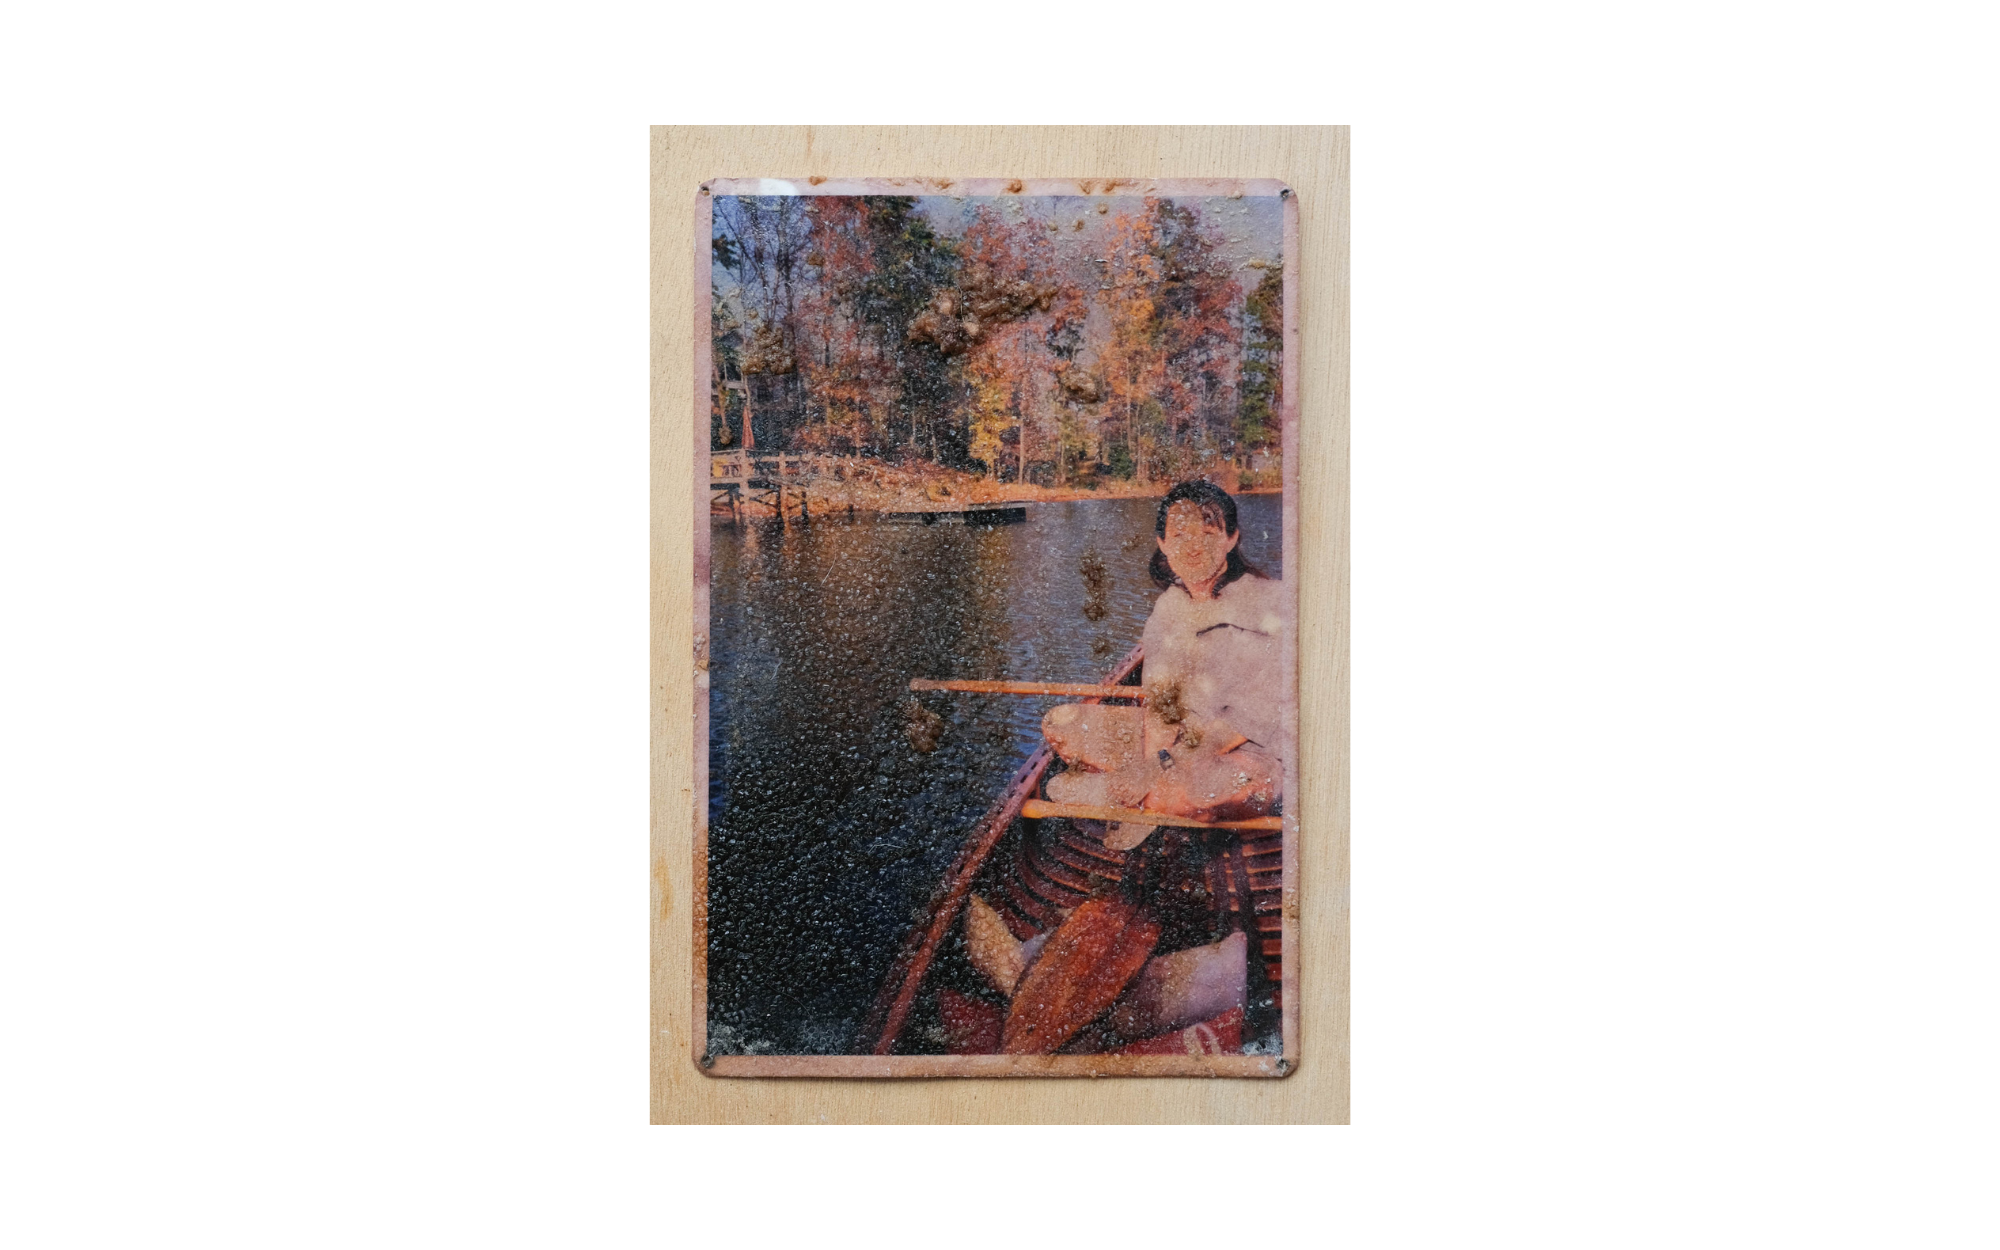  Brienna Kane,  Jam Photo 02 , 4 x 6” inkjet print, blackberry jam, time (Not for sale) 